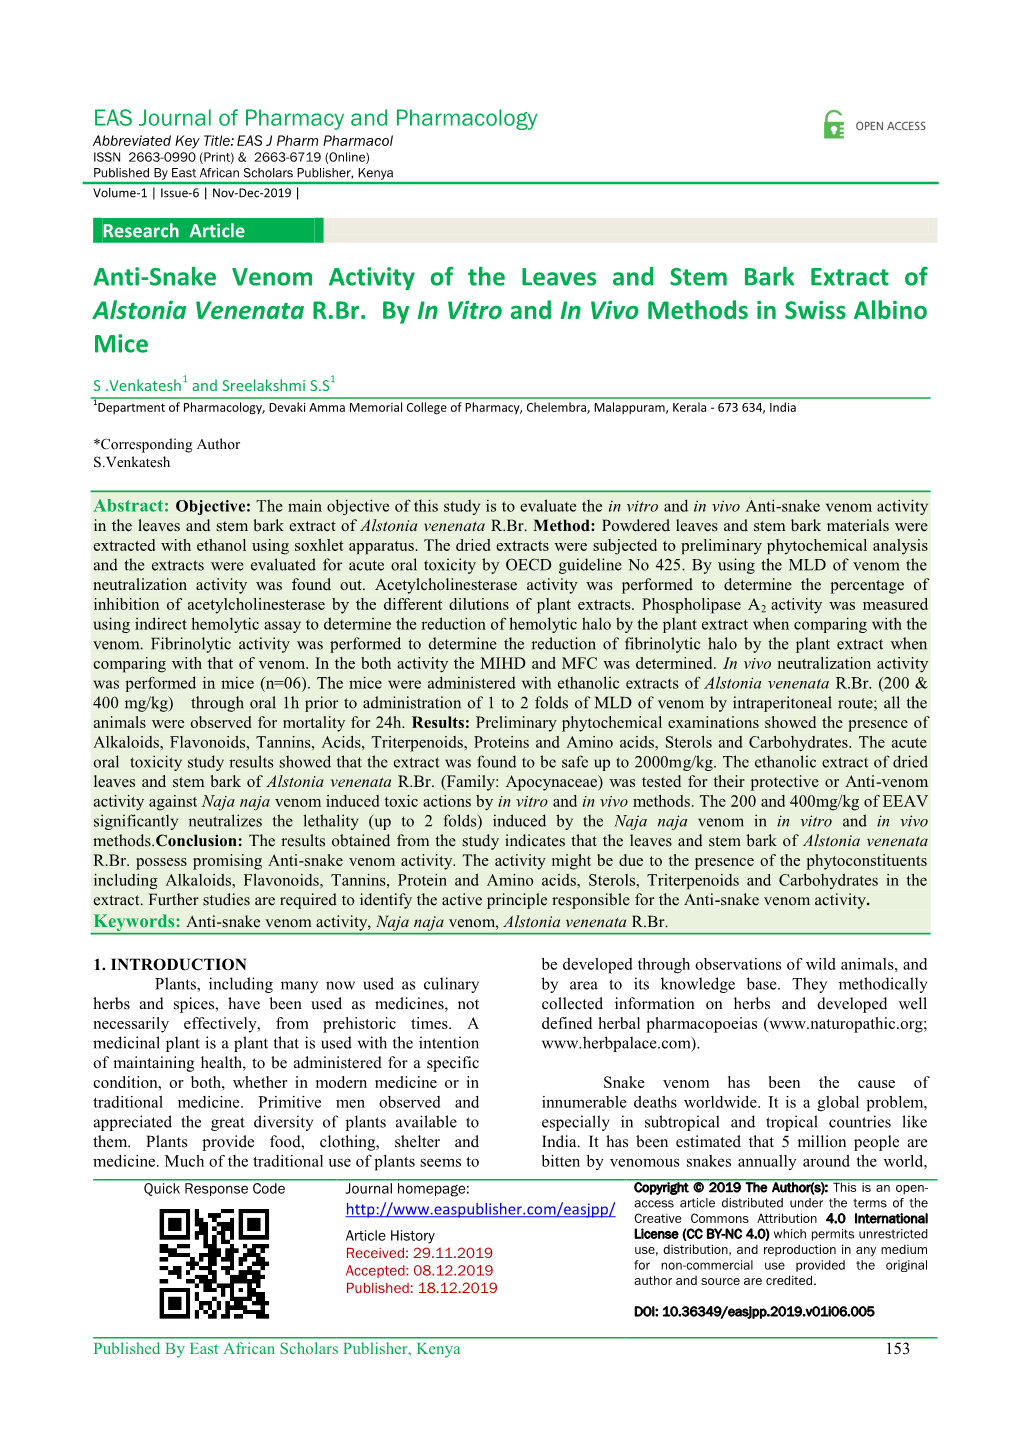 Anti-Snake Venom Activity of the Leaves and Stem Bark Extract of Alstonia Venenata R.Br